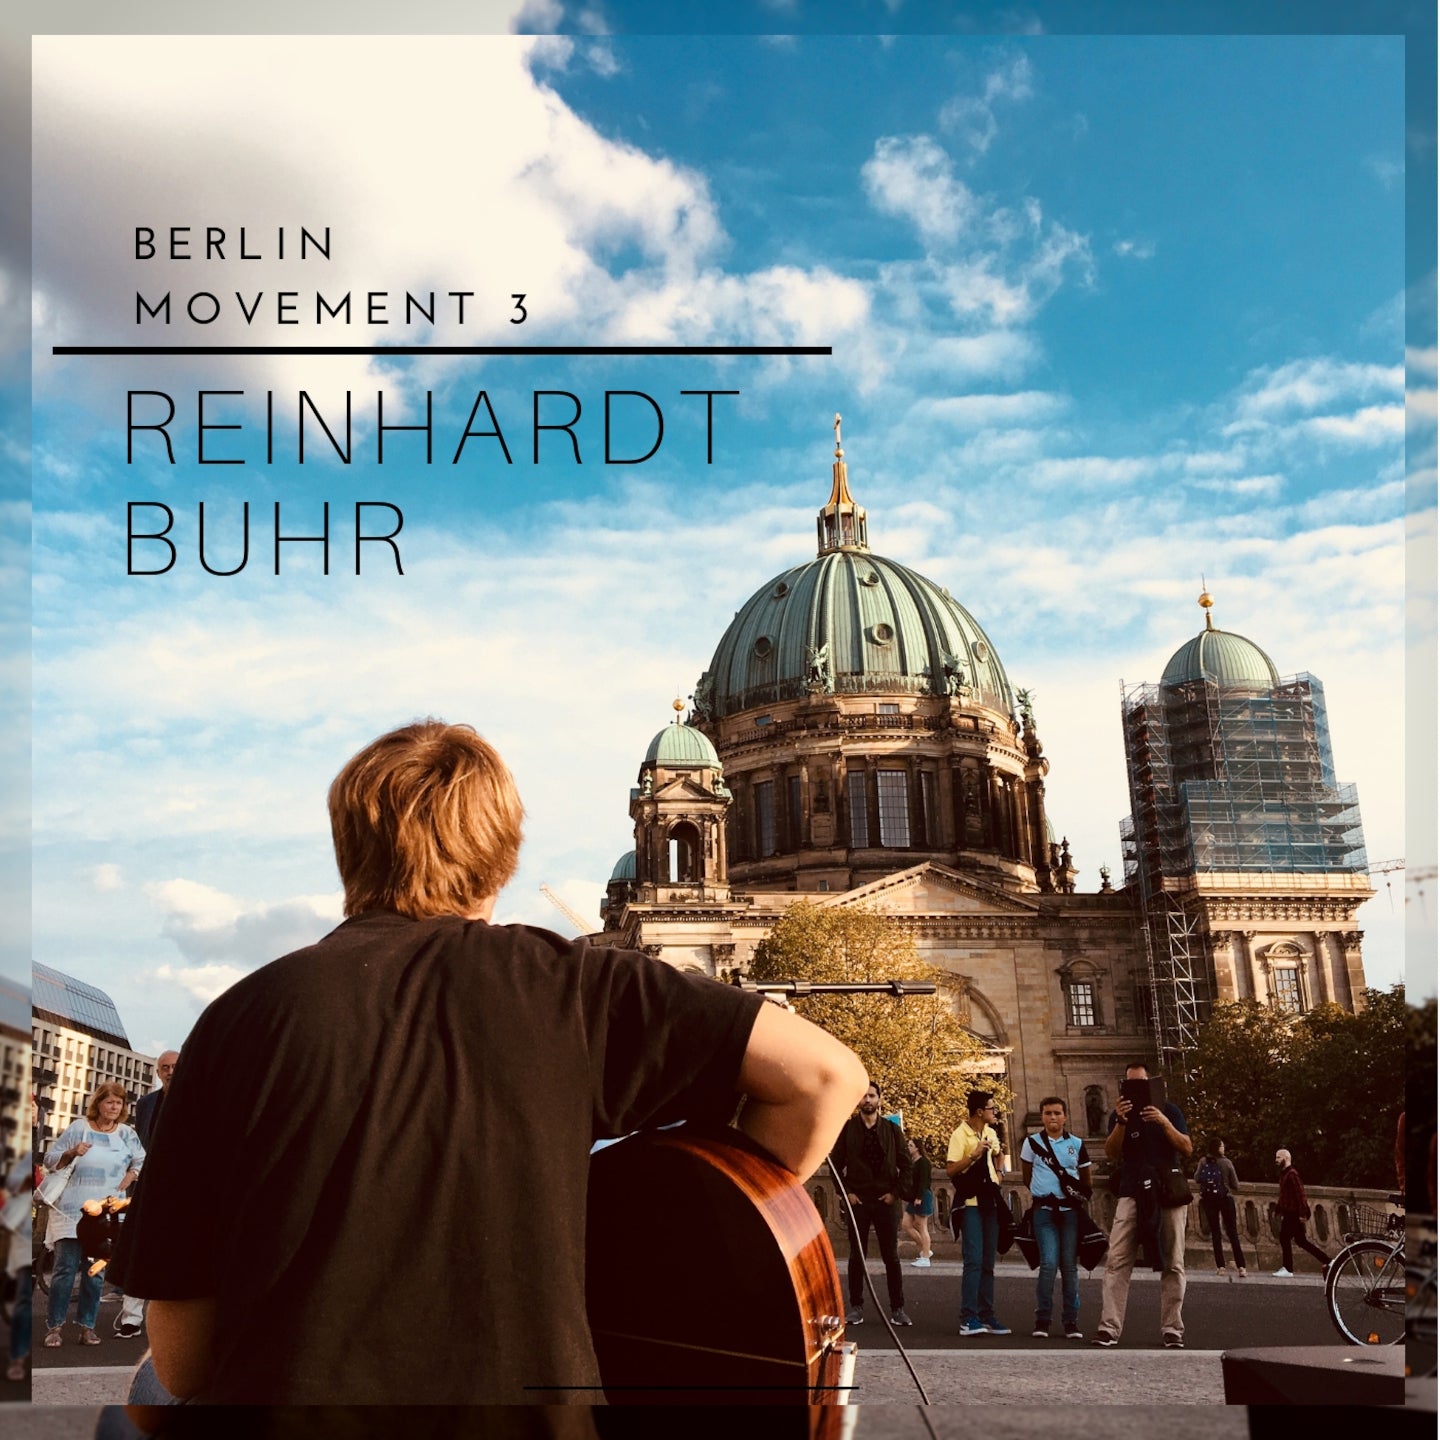 Reinhardt Buhr   Movement 3   Berlin   05 His Glory